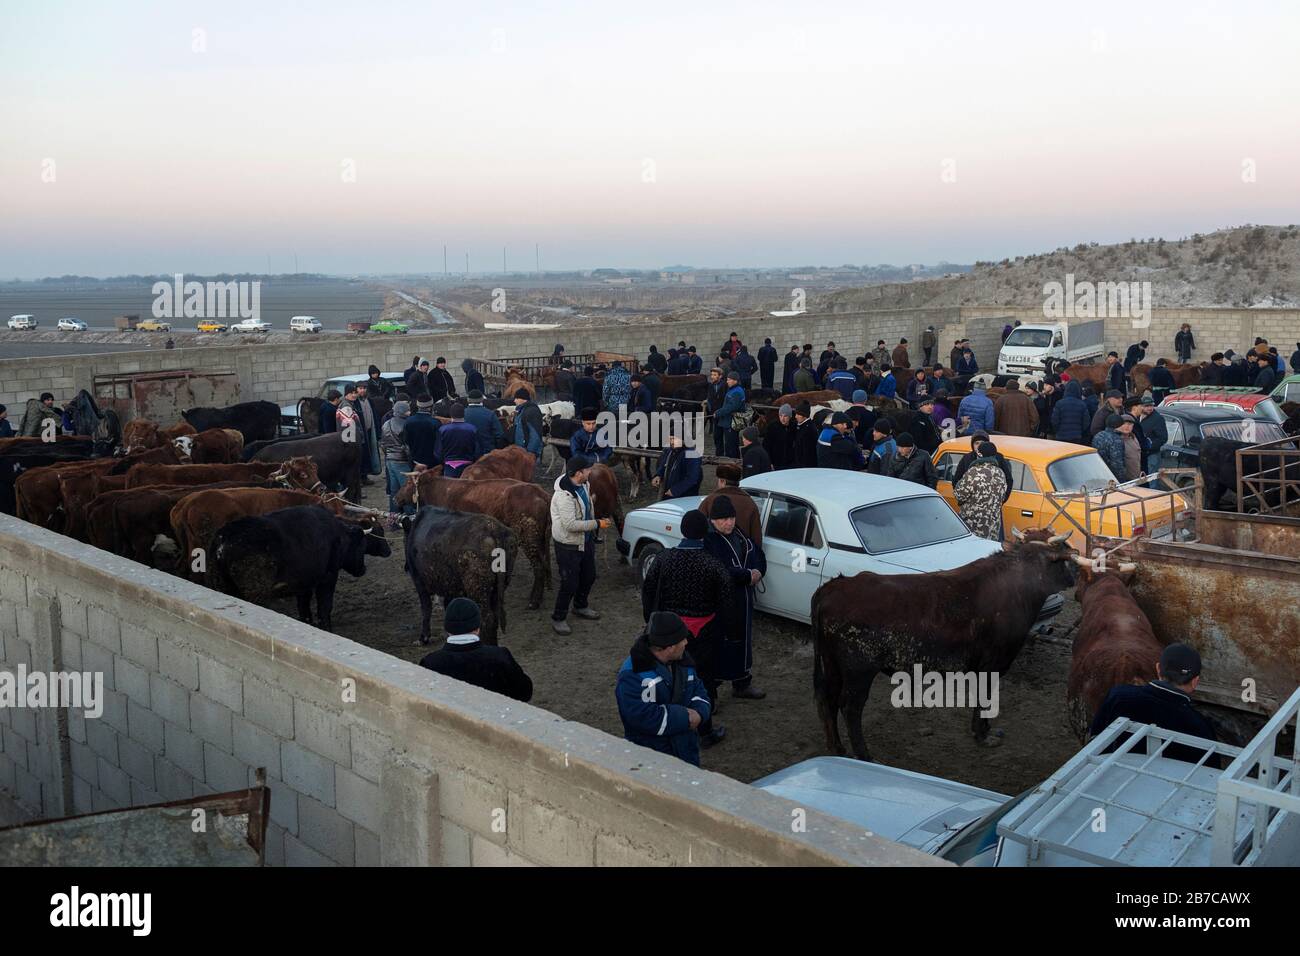 Scene on the morning cattle market in a village near Bukhara, Uzbekistan Stock Photo